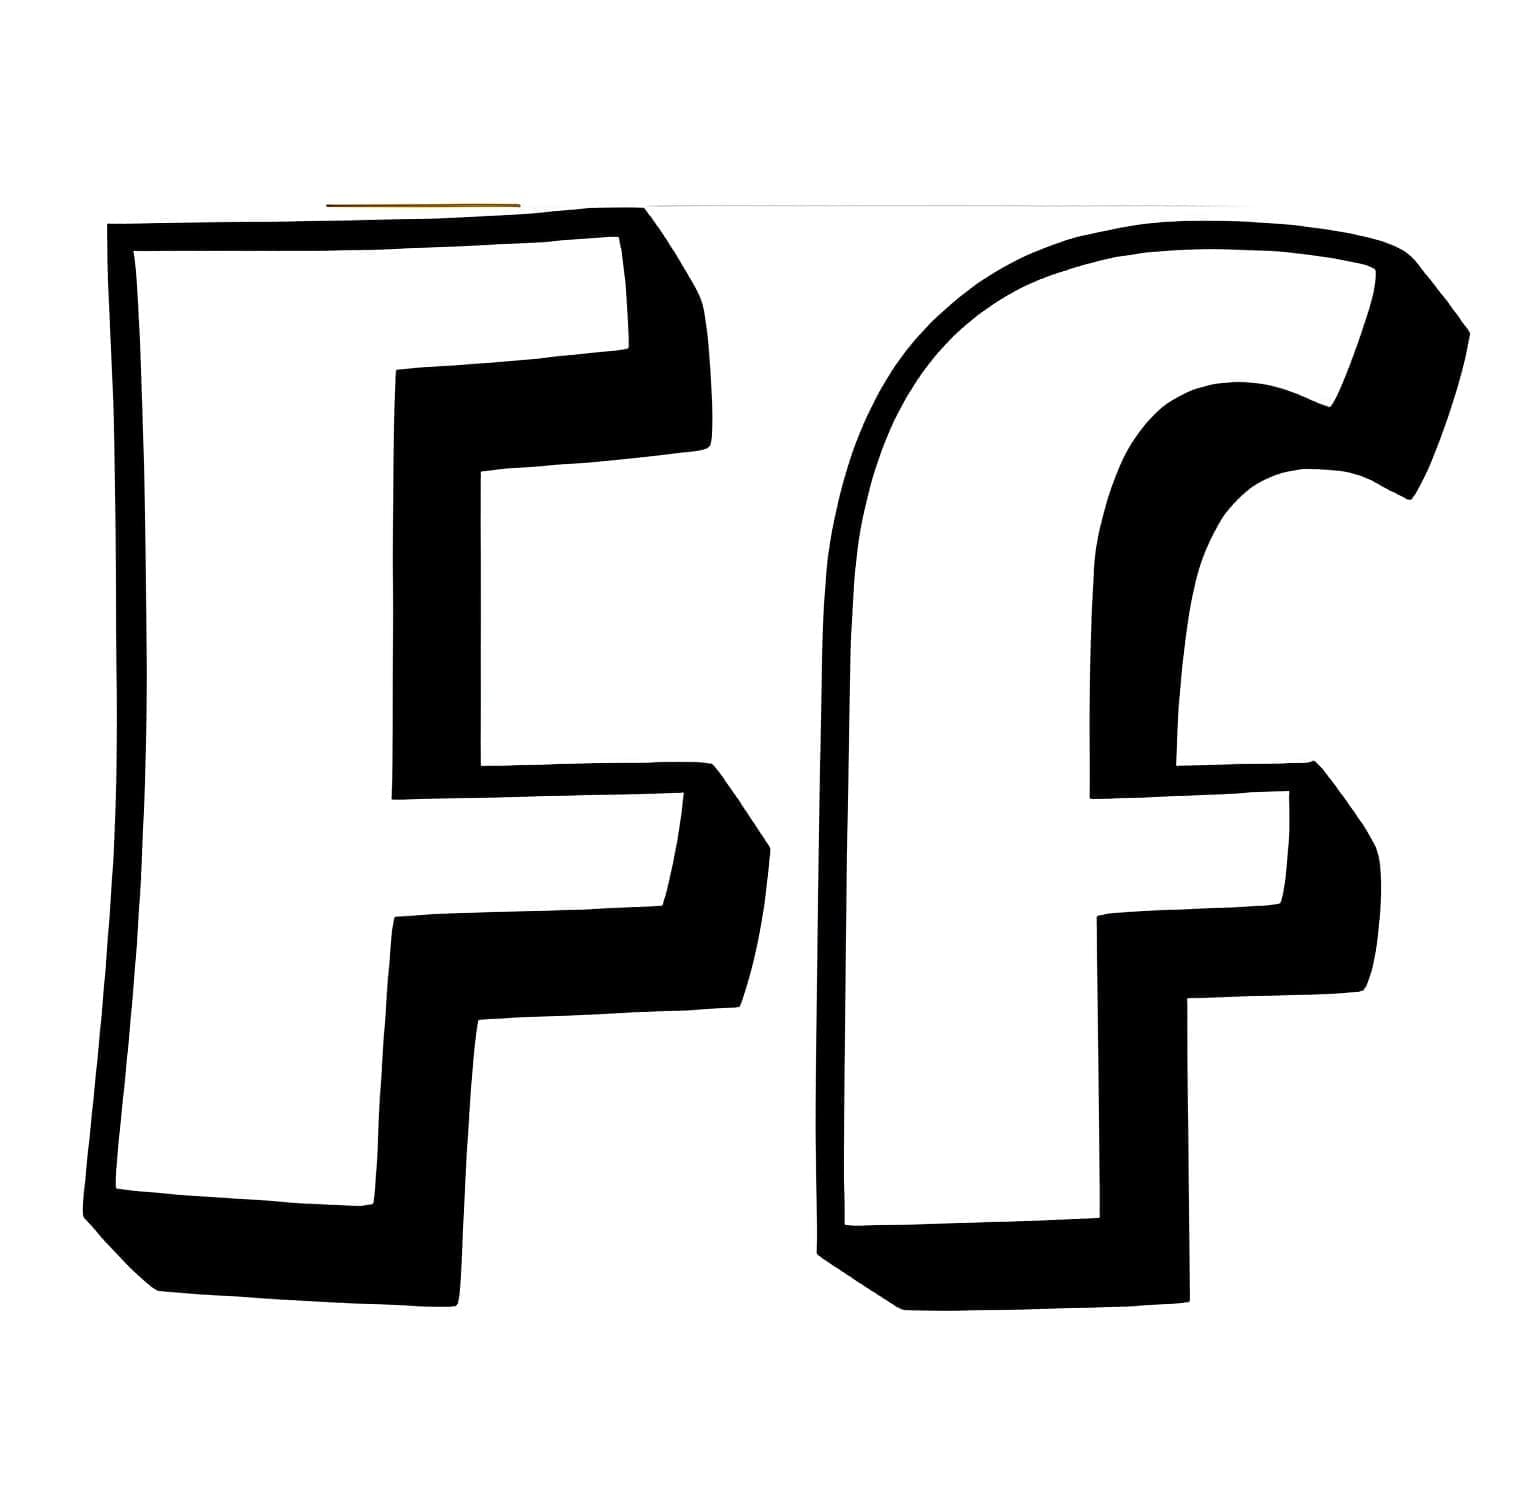 La Lettre F coloring page